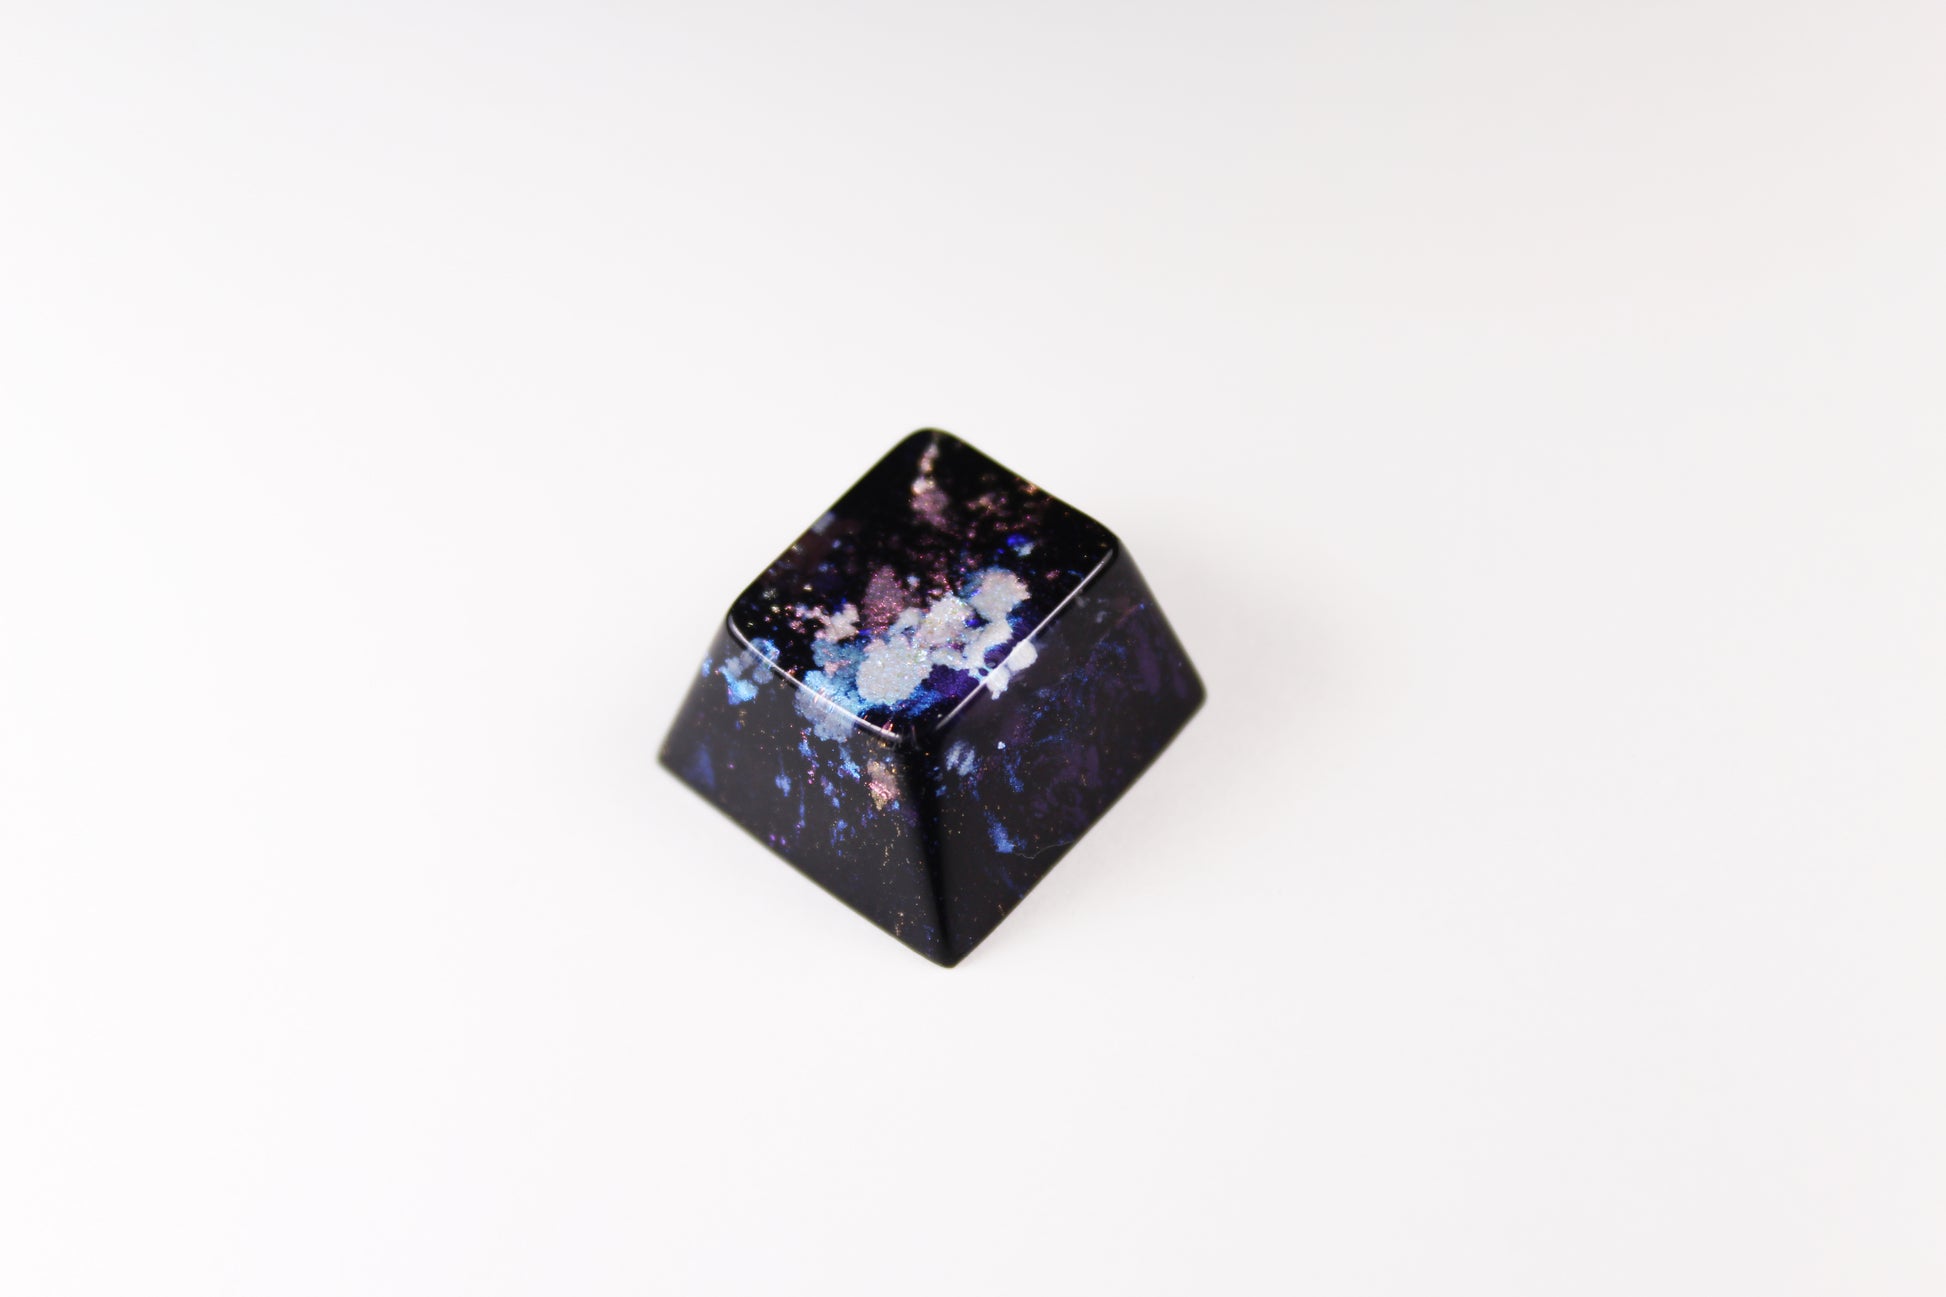 Cherry Esc - Diamond Nebula - PrimeCaps Keycap - Blank and Sculpted Artisan Keycaps for cherry MX mechanical keyboards 